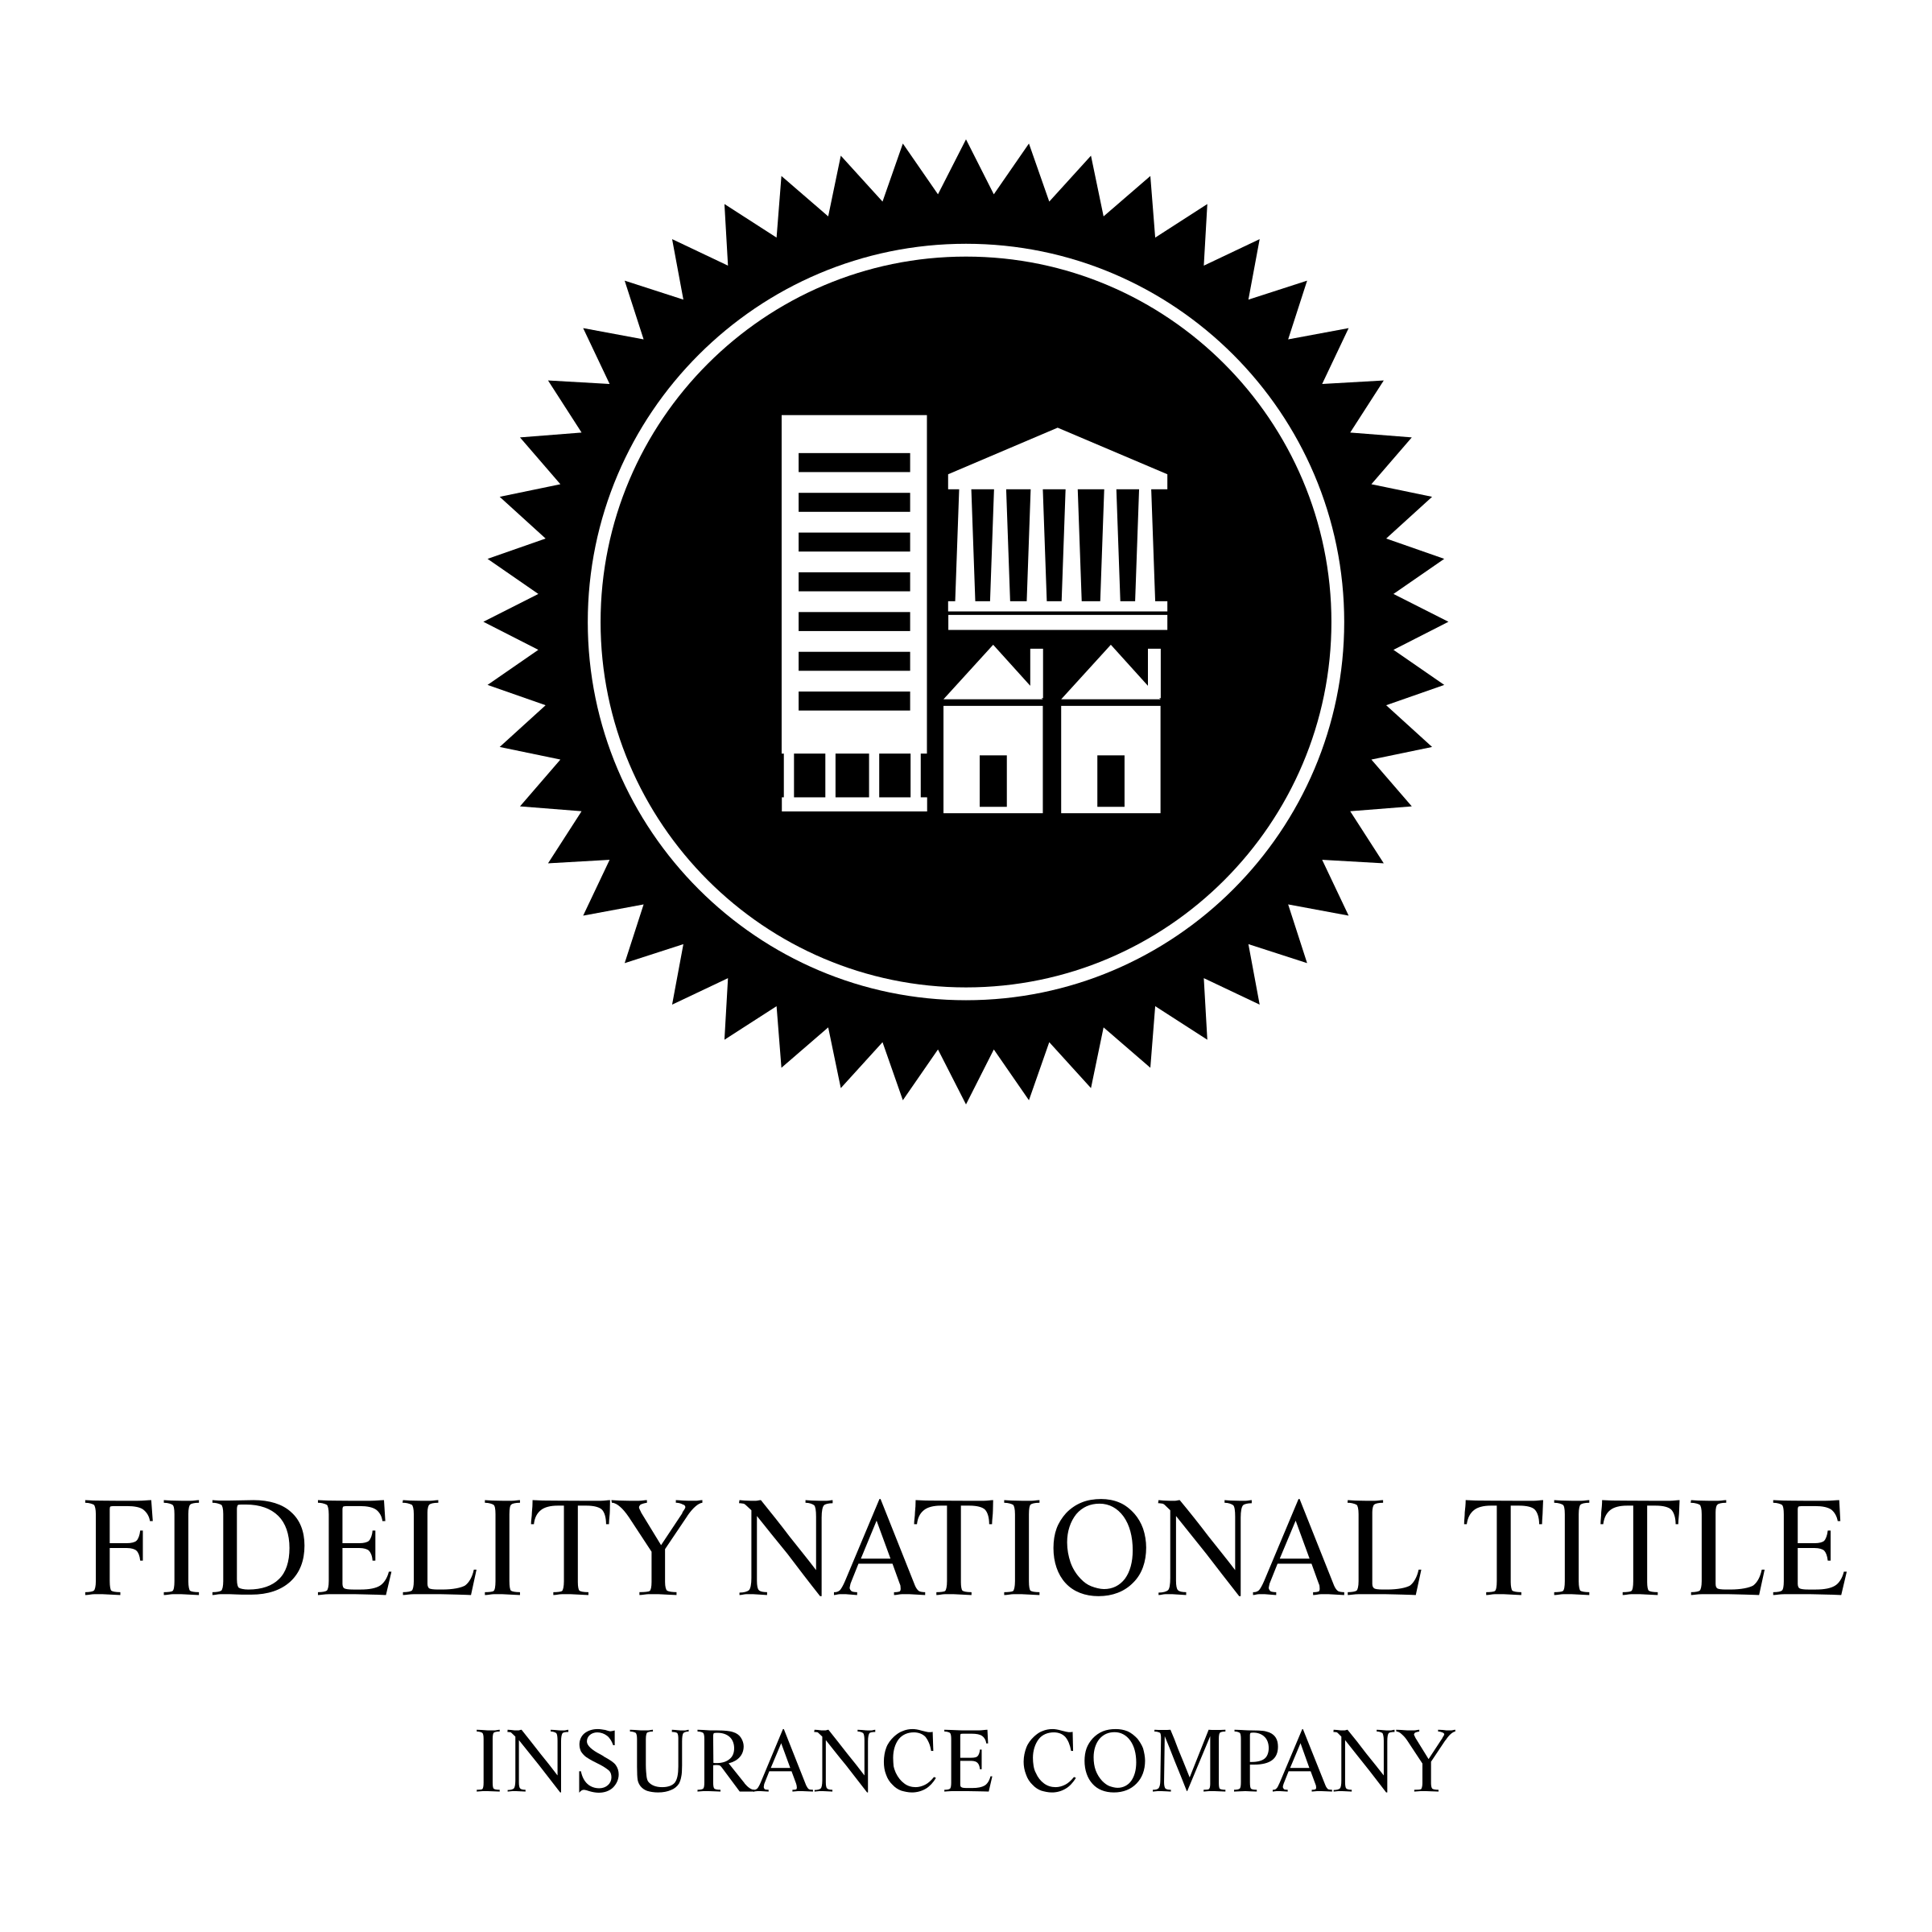 Fidelity Company Logo - Fidelity National Title Logo PNG Transparent & SVG Vector - Freebie ...